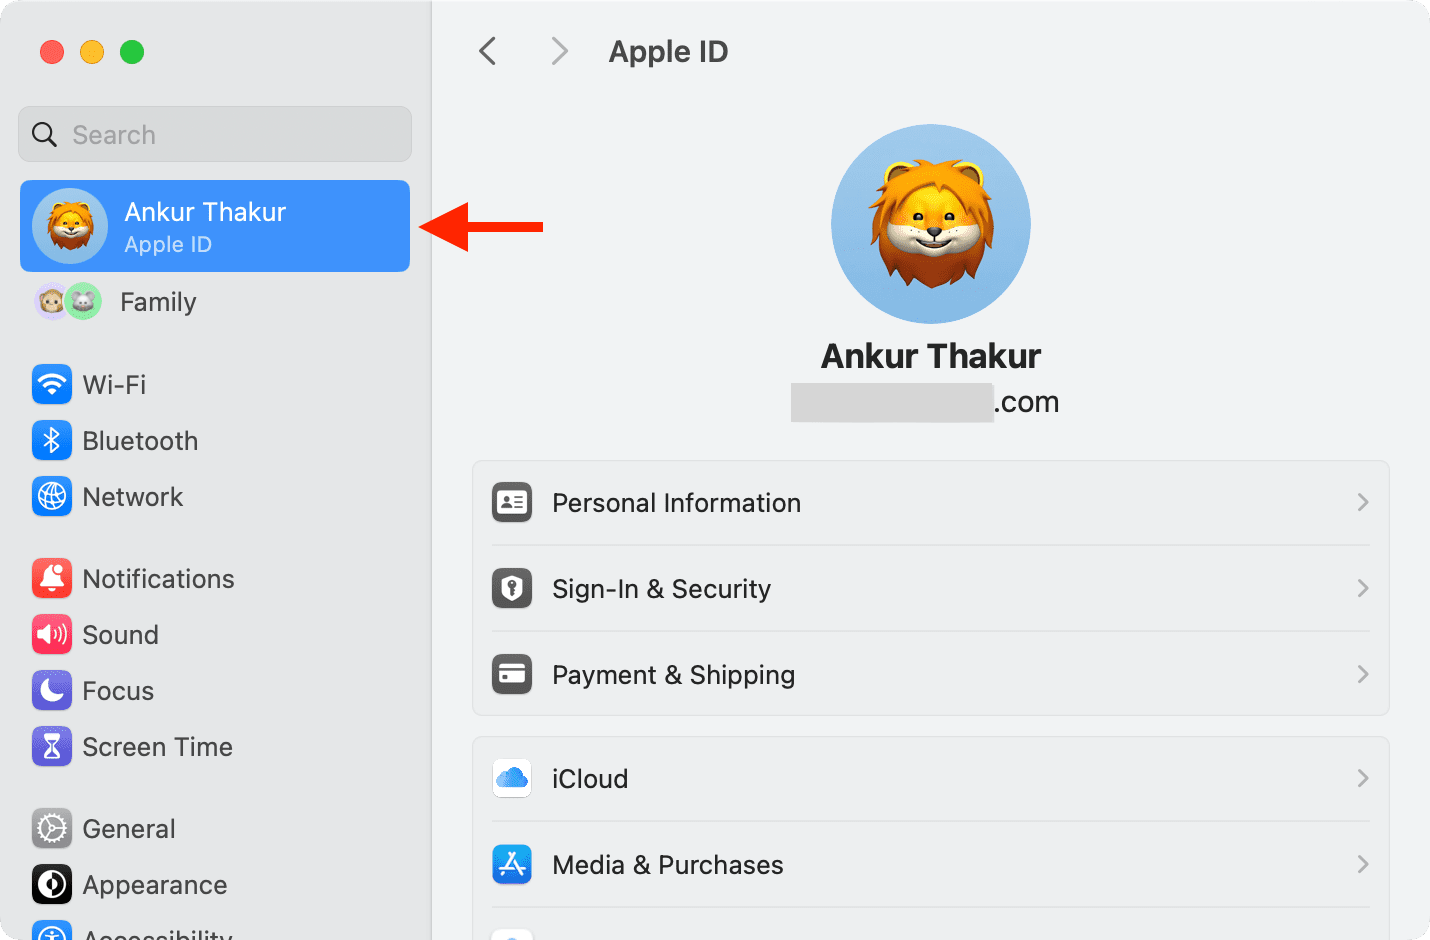 Apple ID screen in Mac System Settings